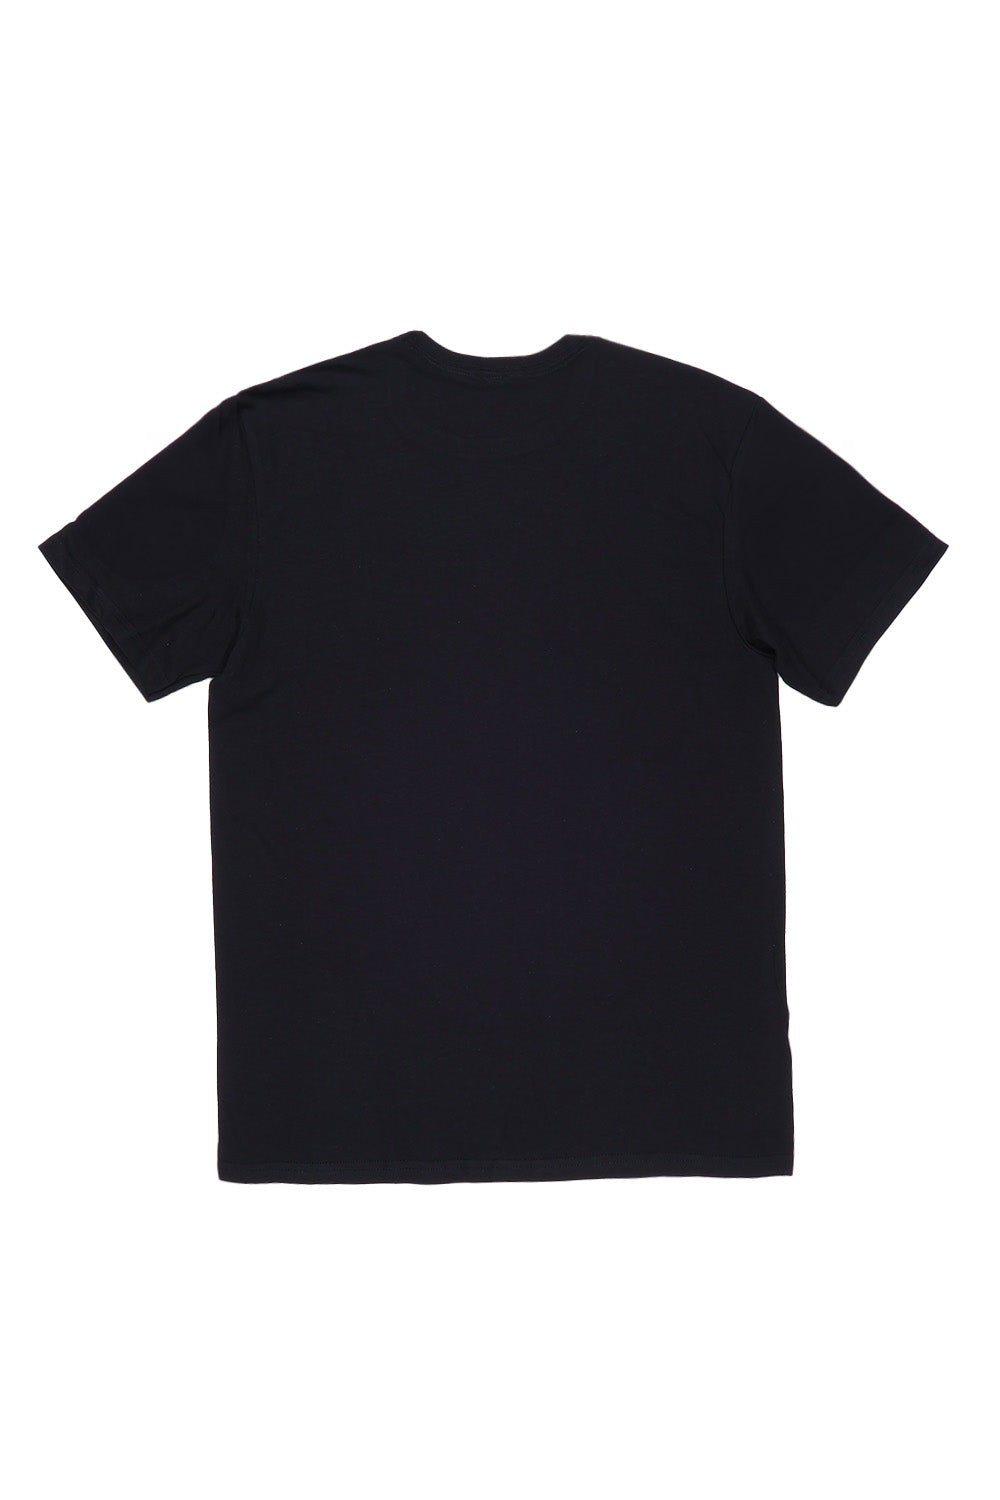 Happy Soul T-Shirt in Black (Custom Packs)